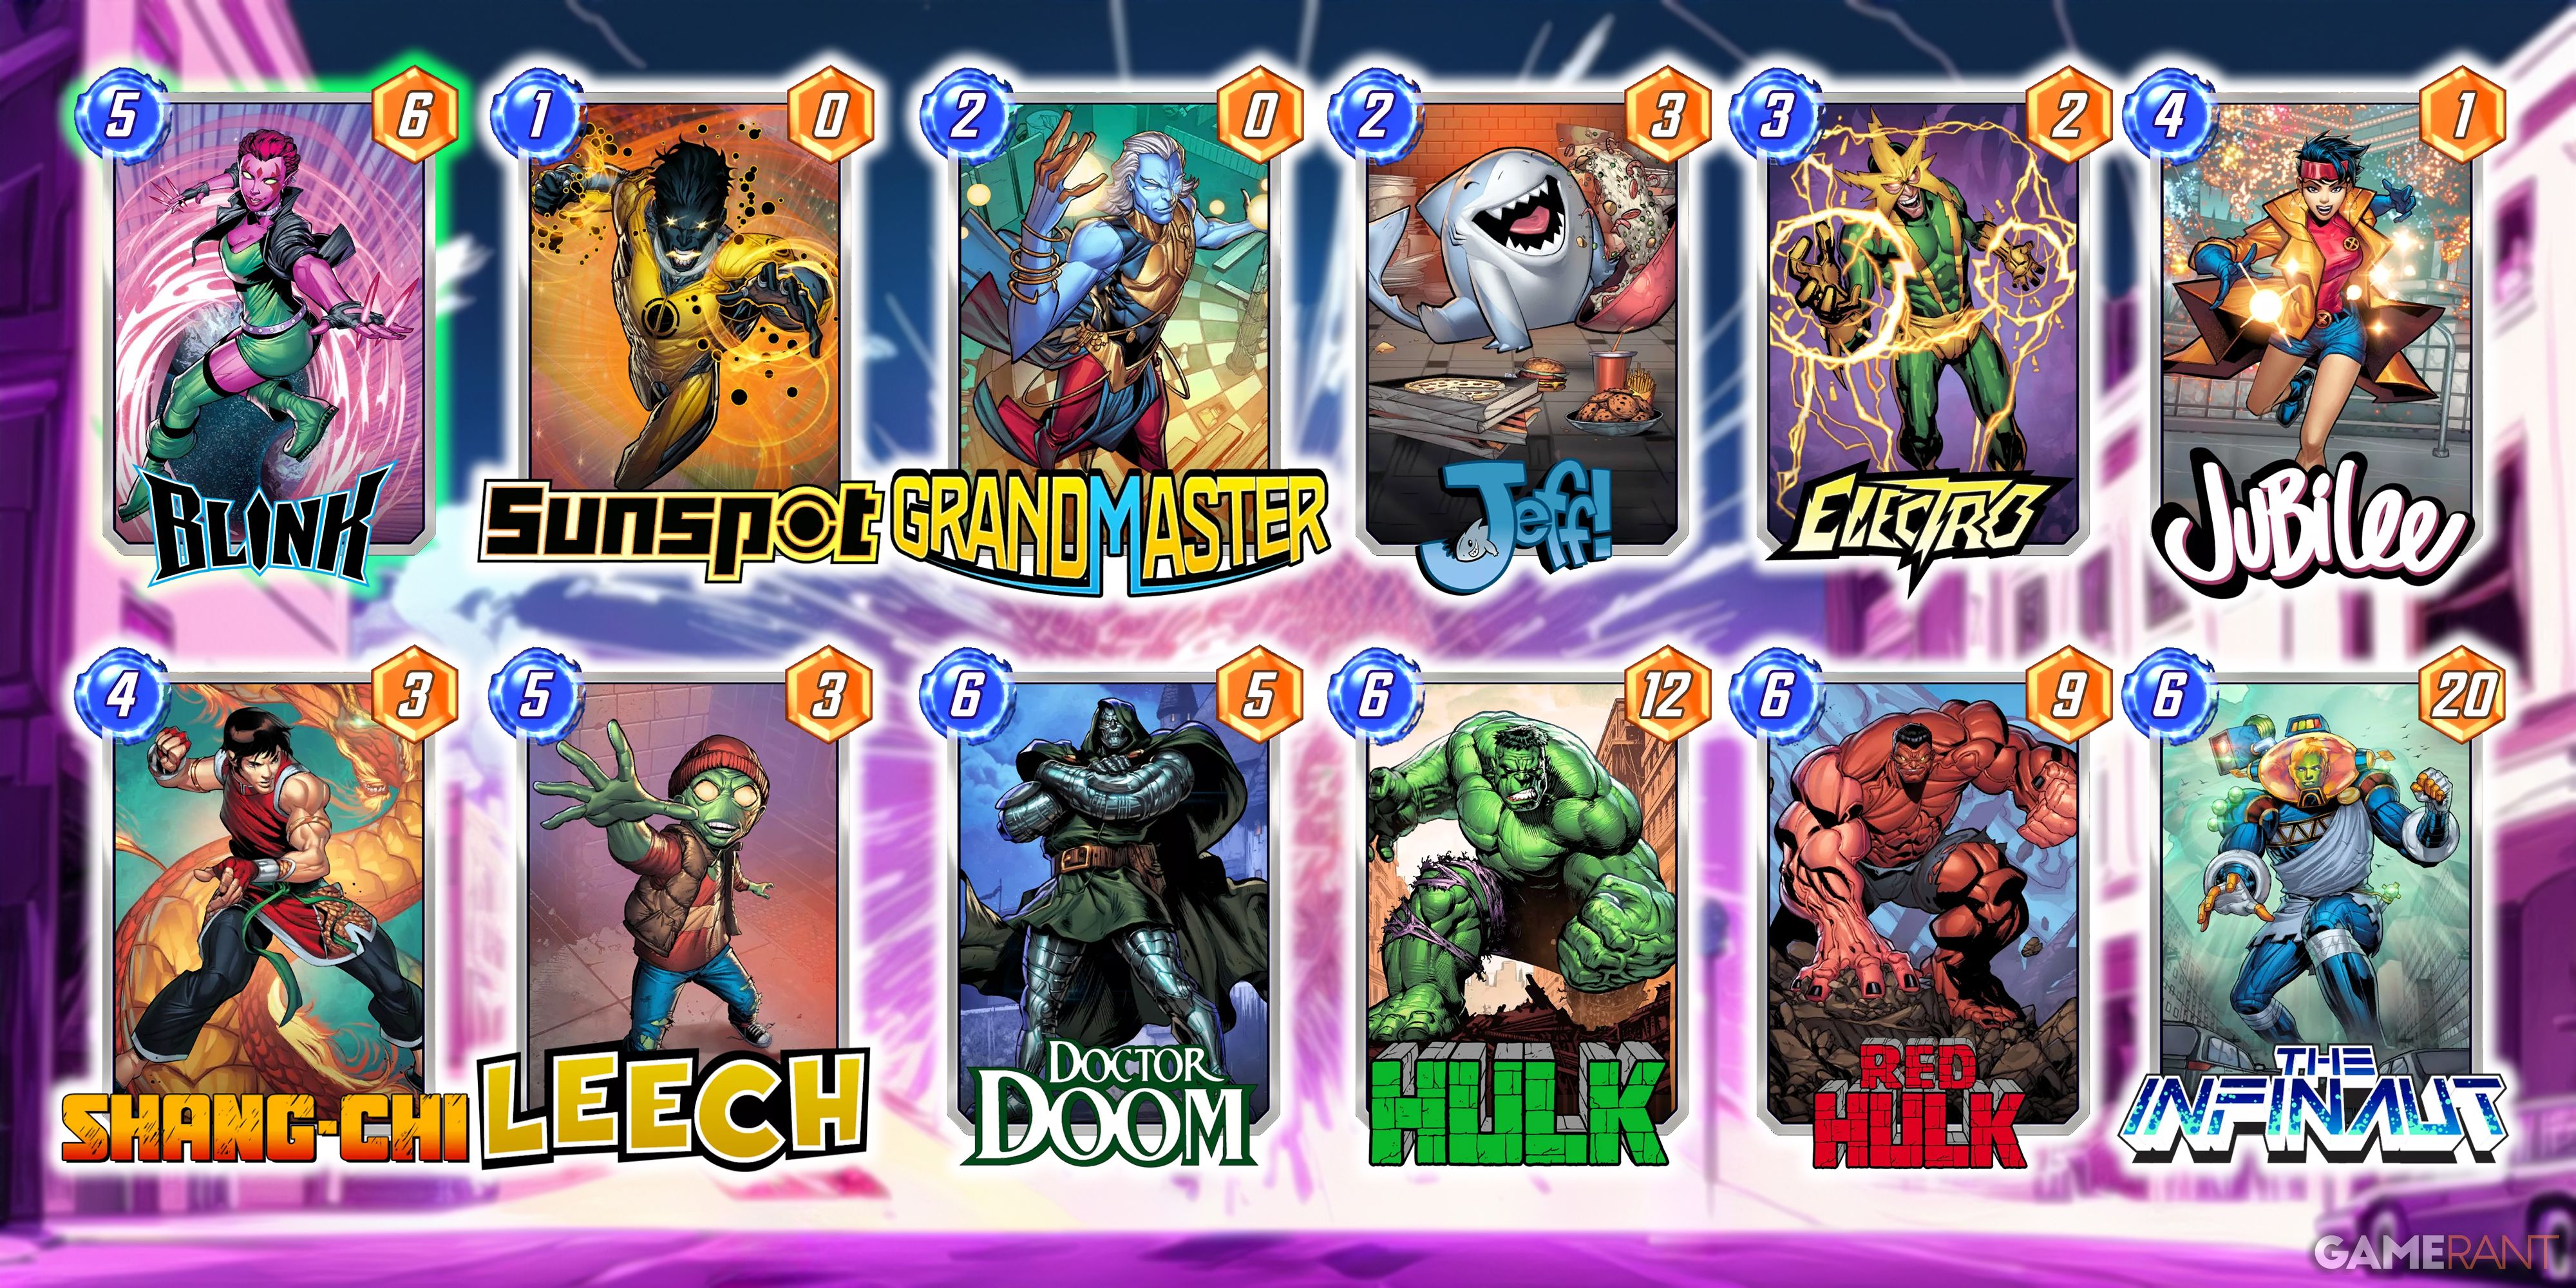 A Marvel Snap deck consisting of Blink, Sunspot, Grandmaster, Jeff, Electro, Jubilee, Shang-Chi, Leech, Doctor Doom, Hulk, Red Hulk, and The Infinaut.